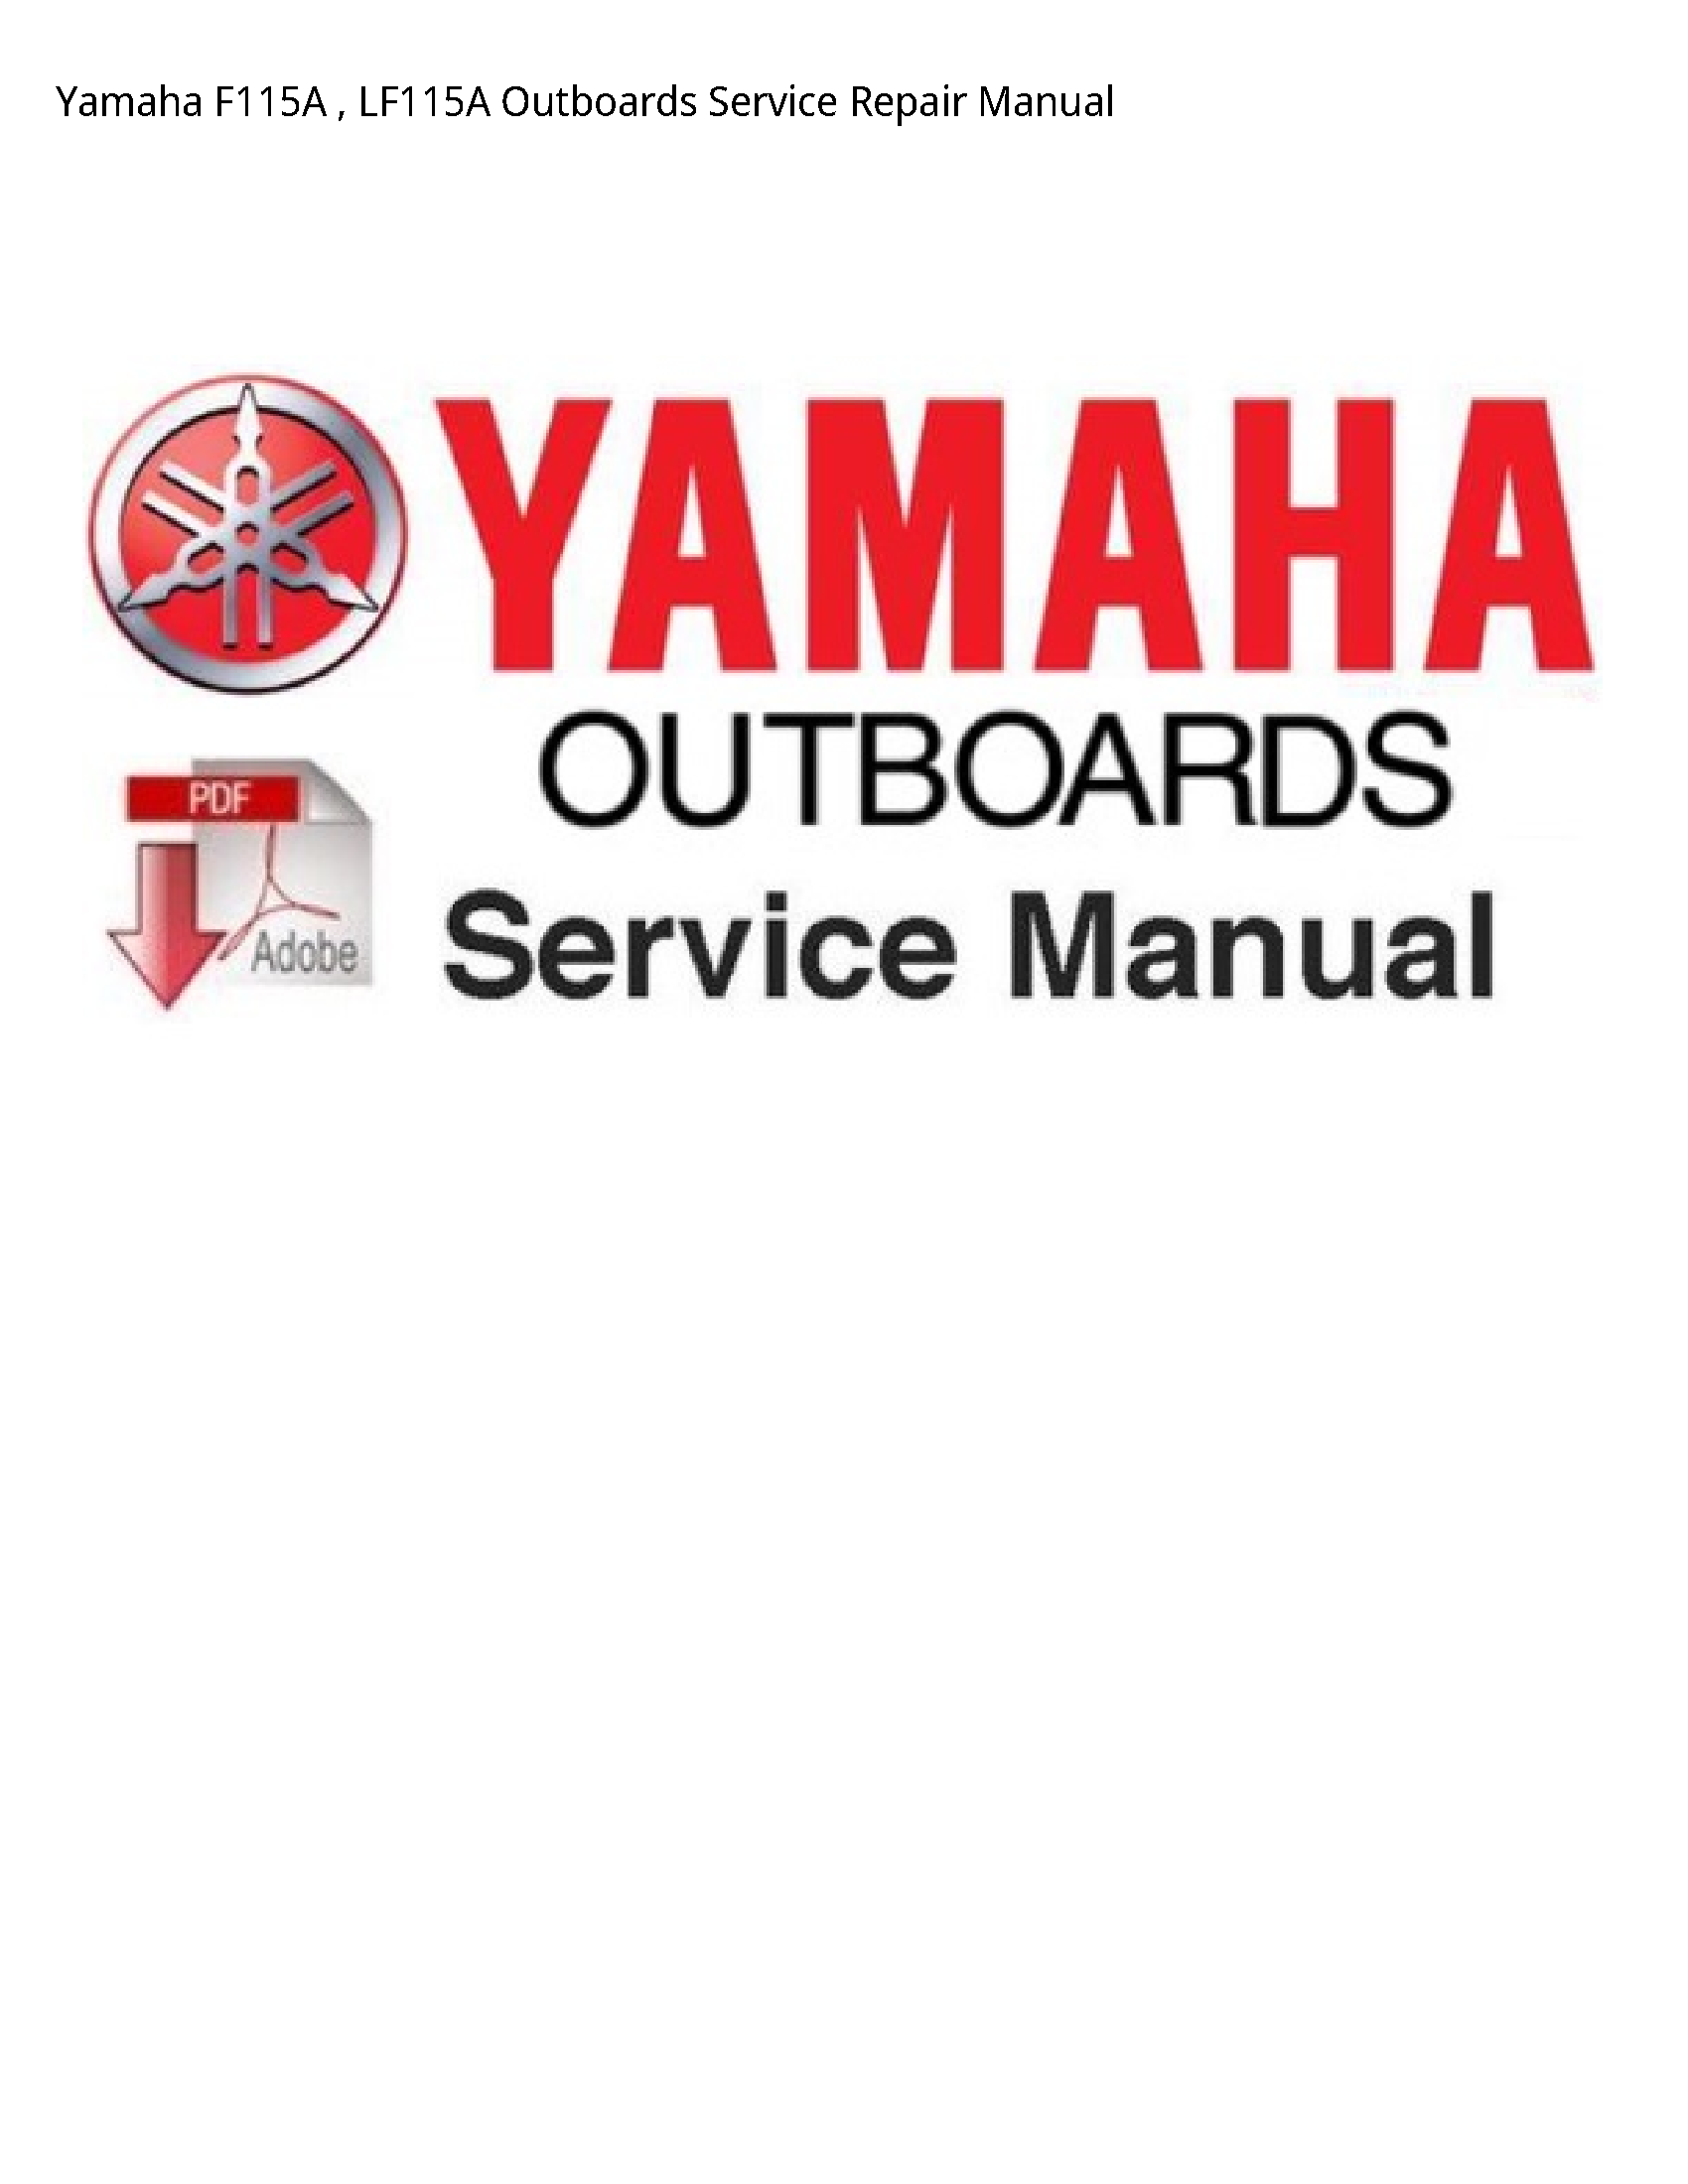 Yamaha F115A Outboards manual